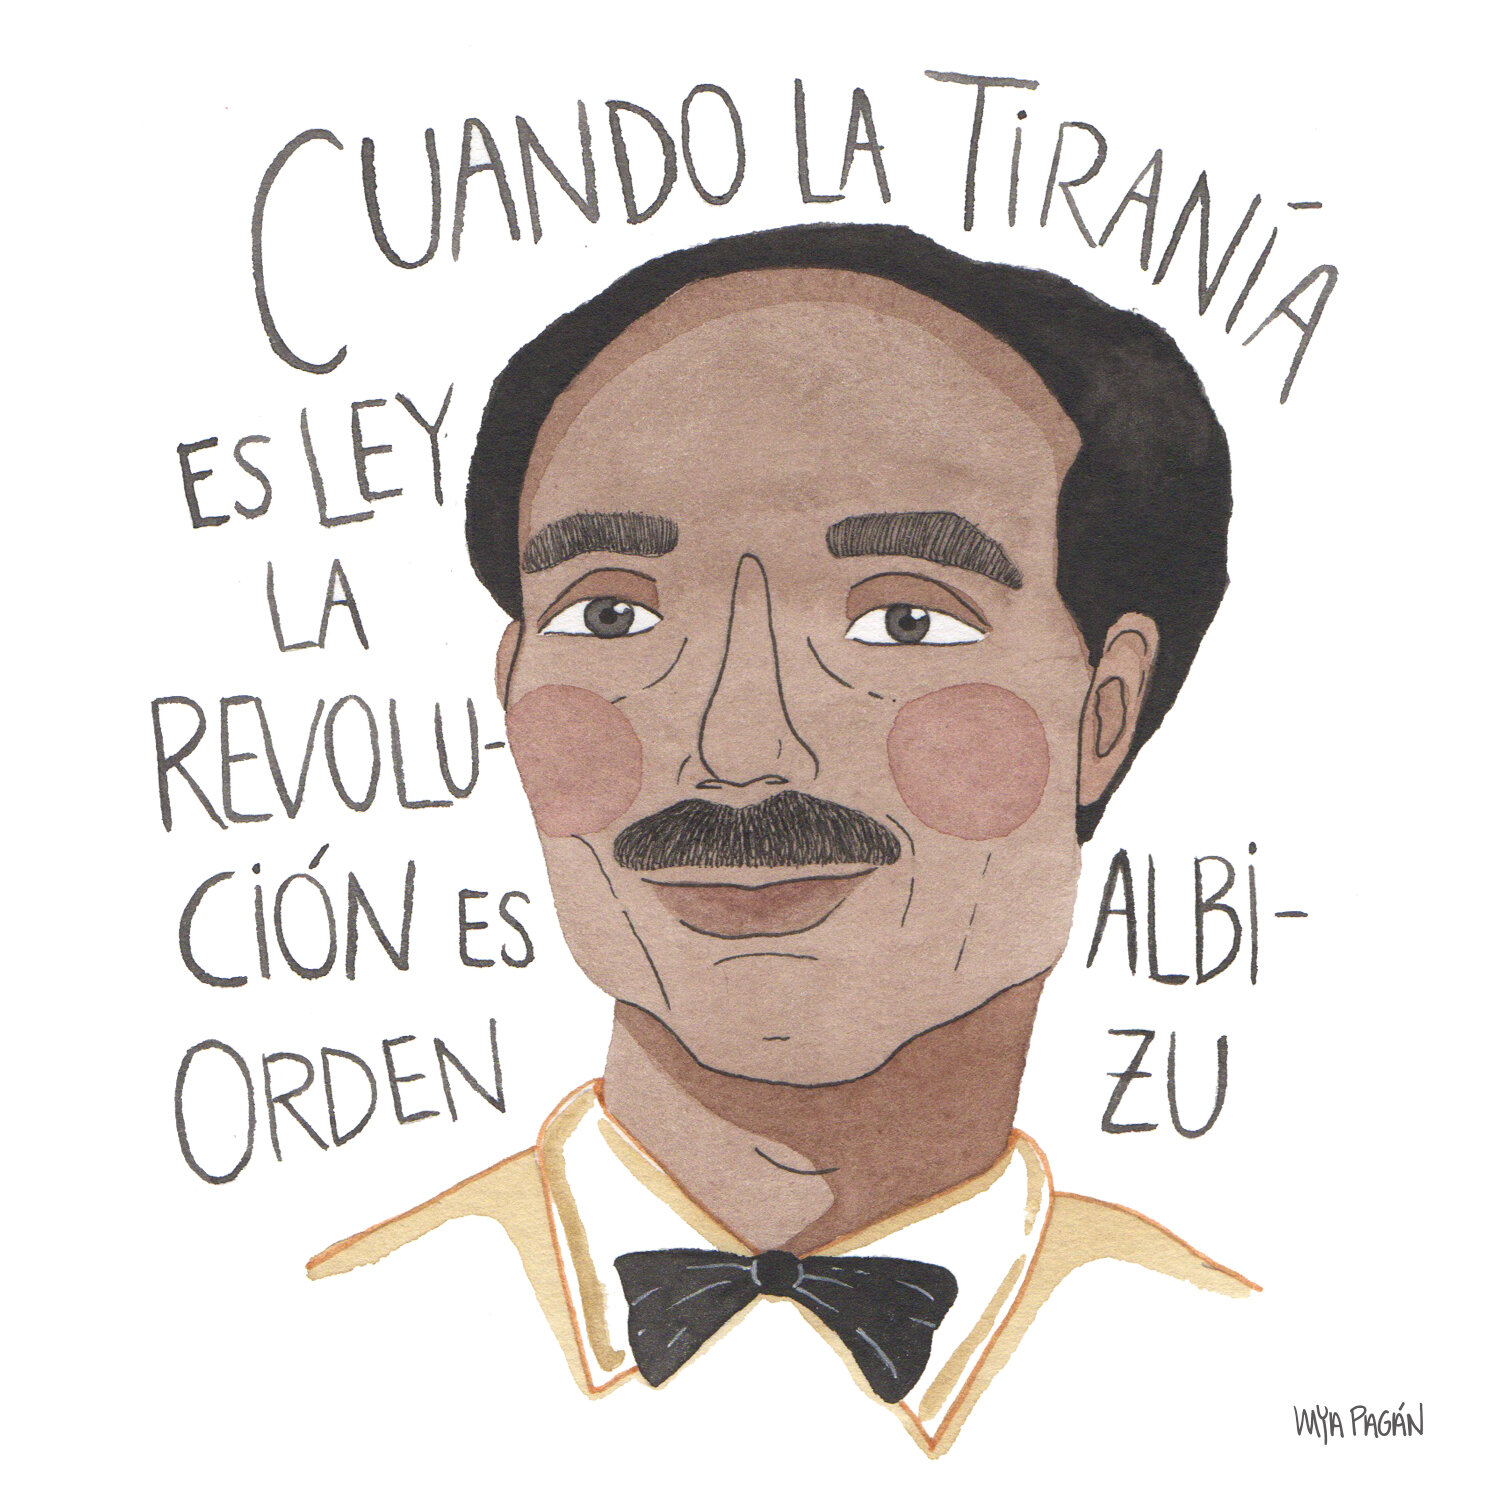 Commissioned watercolor portrait of Albizu Campos 